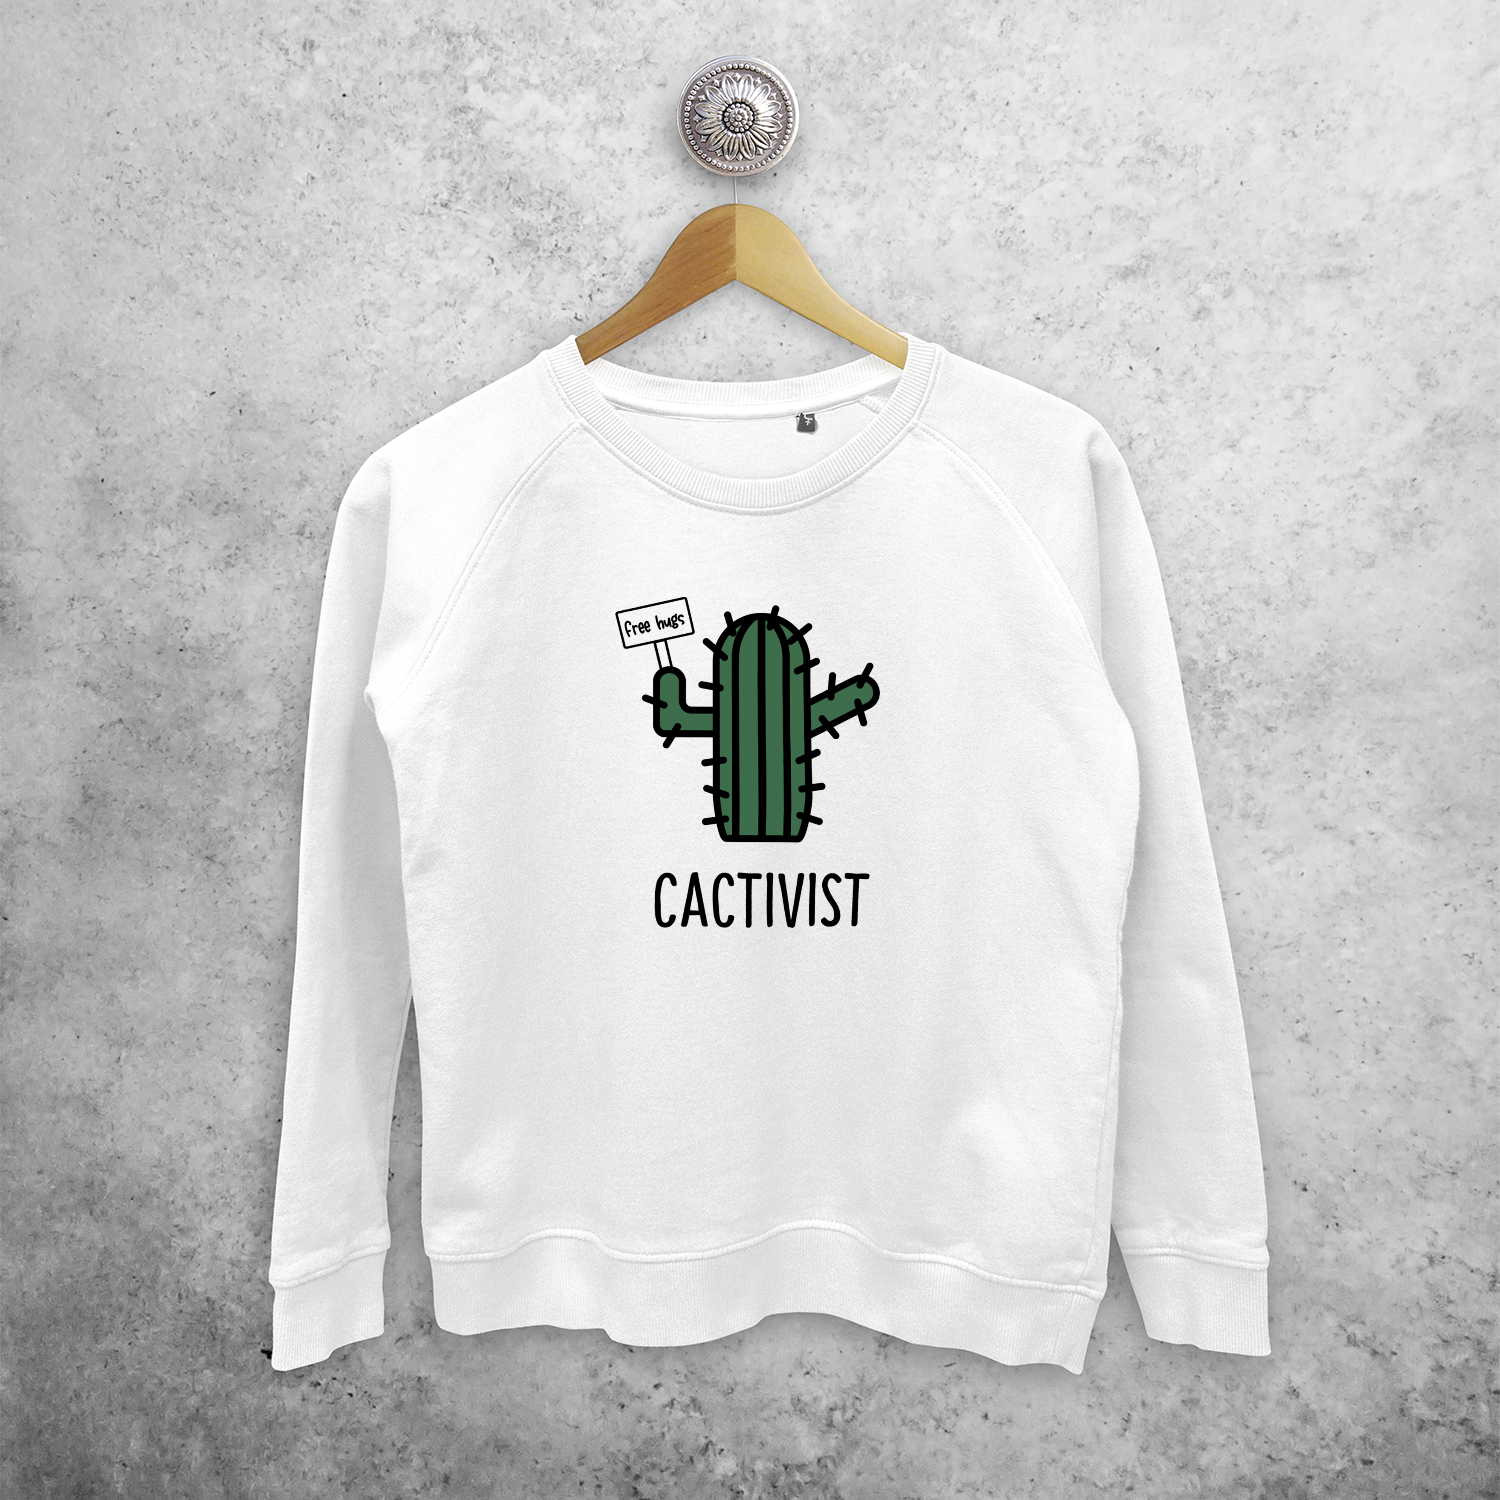 'Cactivist' sweater